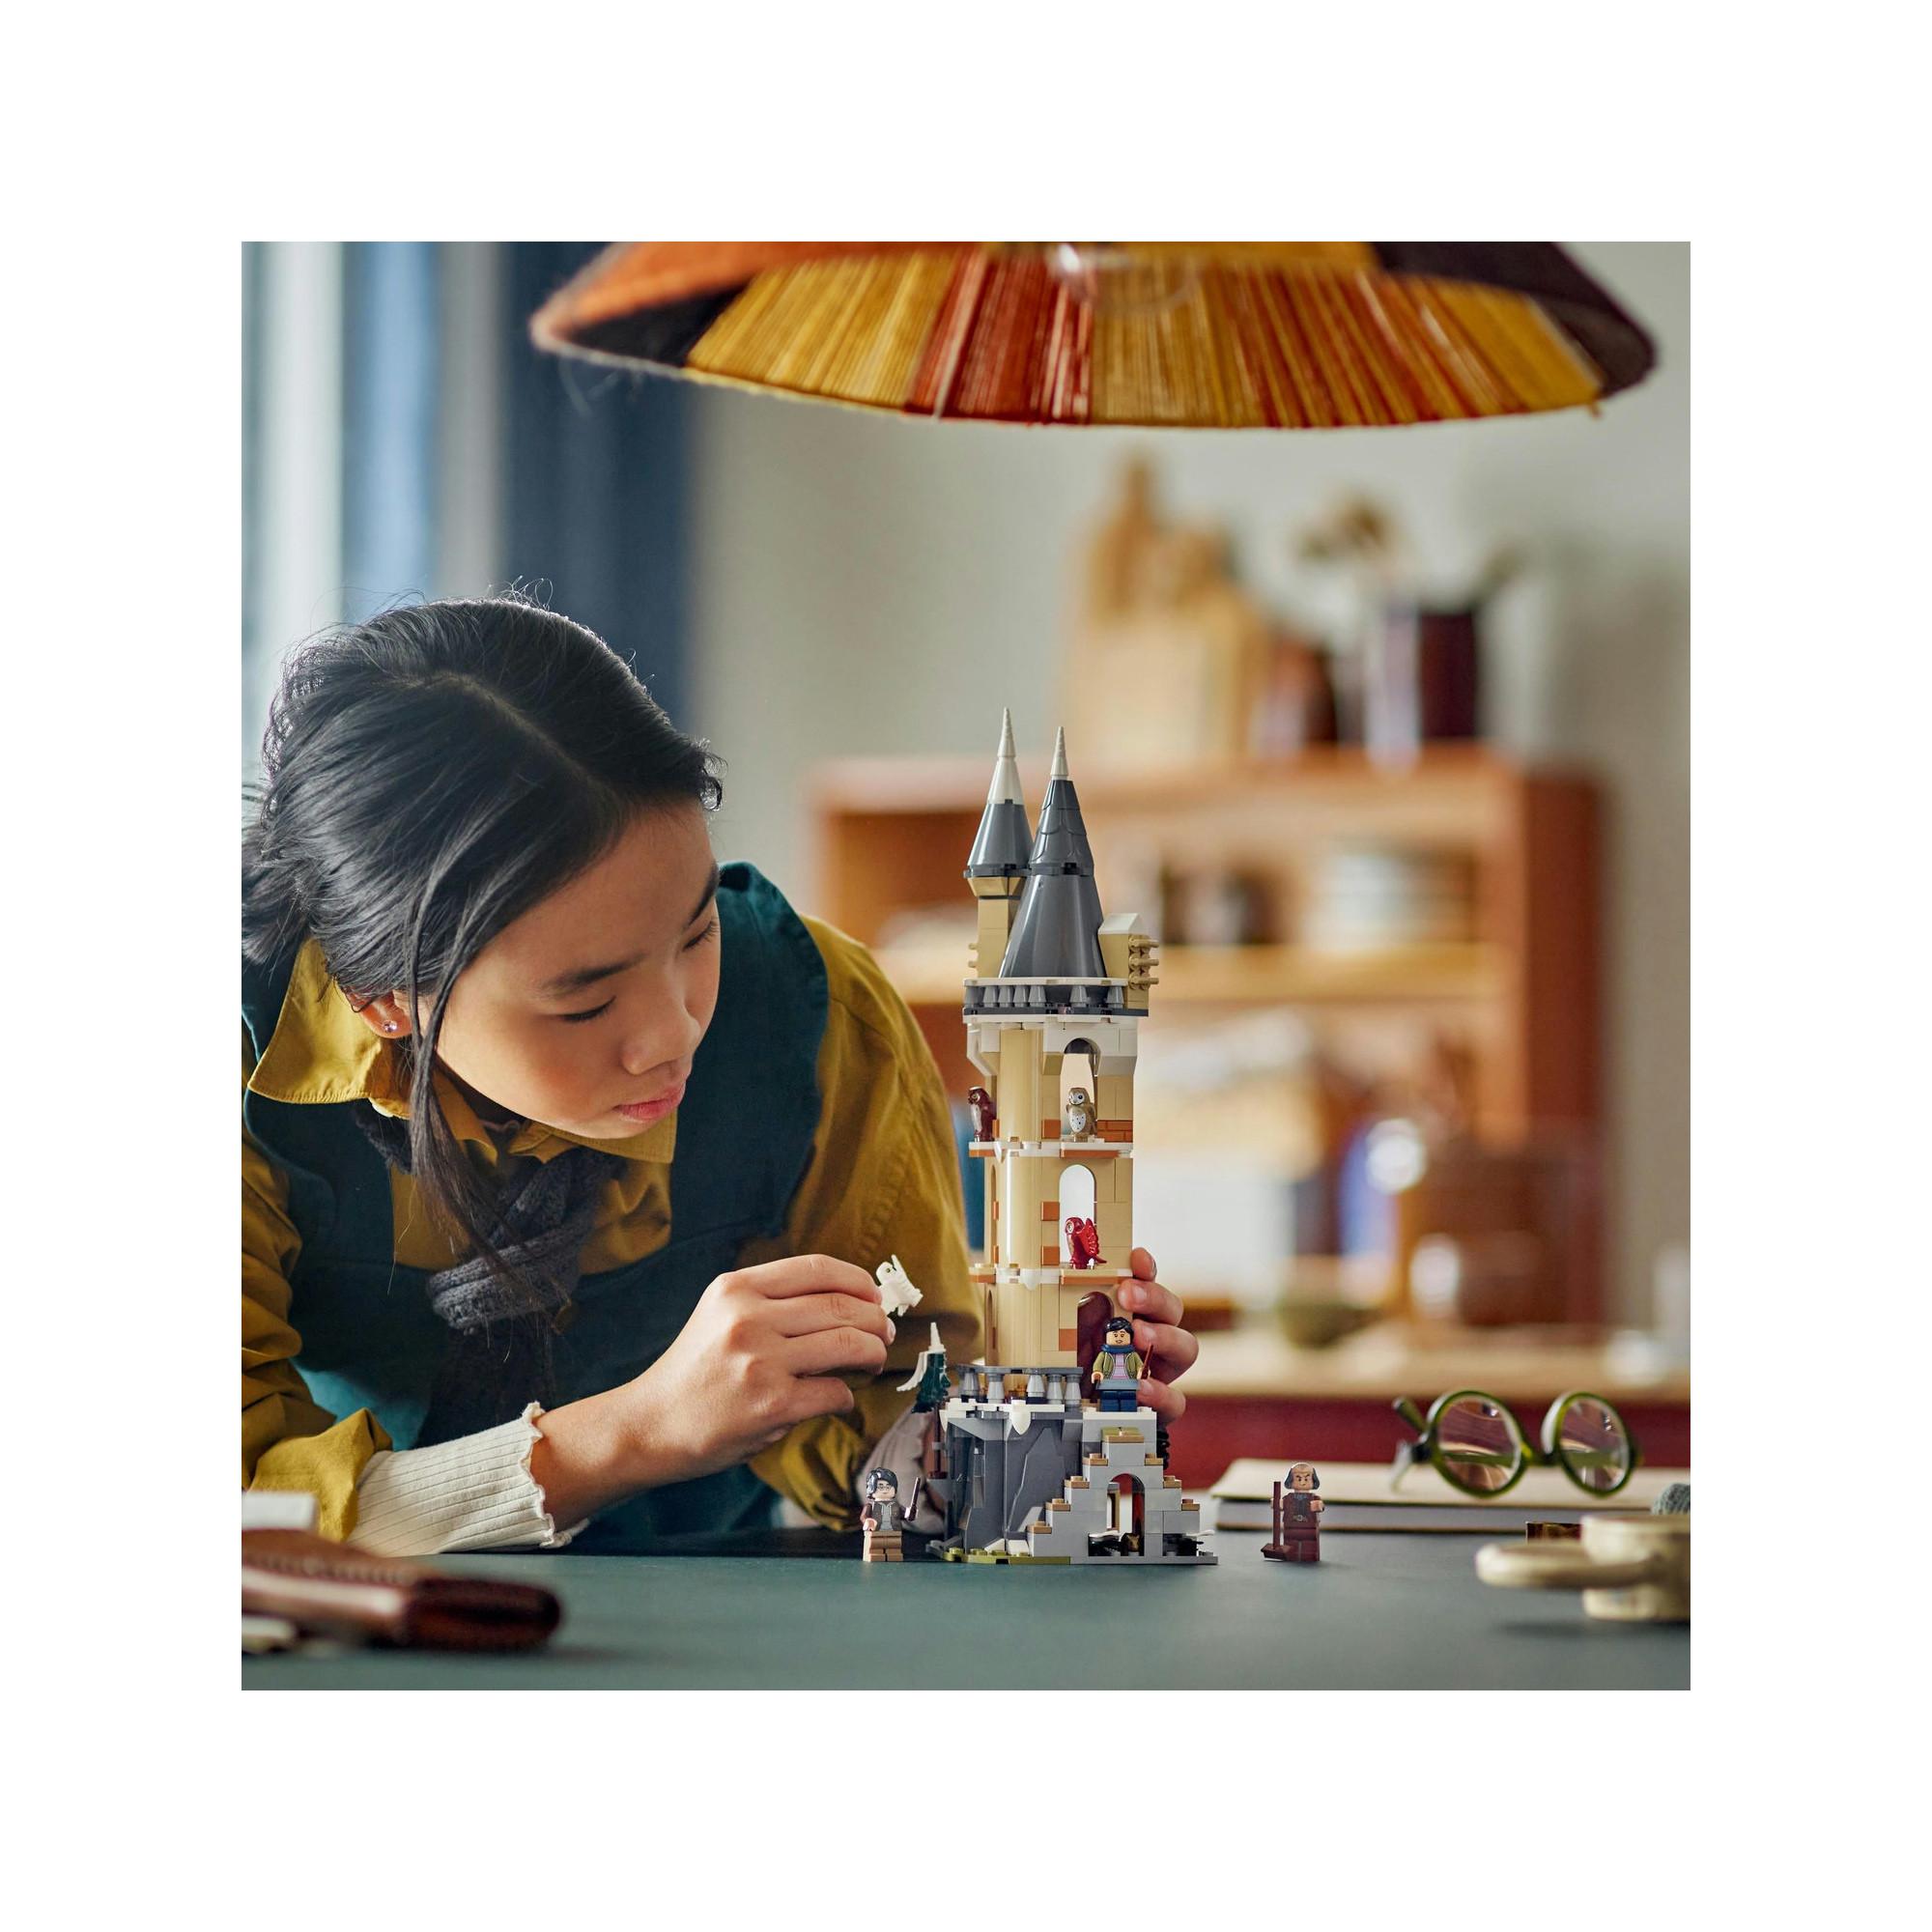 LEGO®  76430 Eulerei auf Schloss Hogwarts™ 